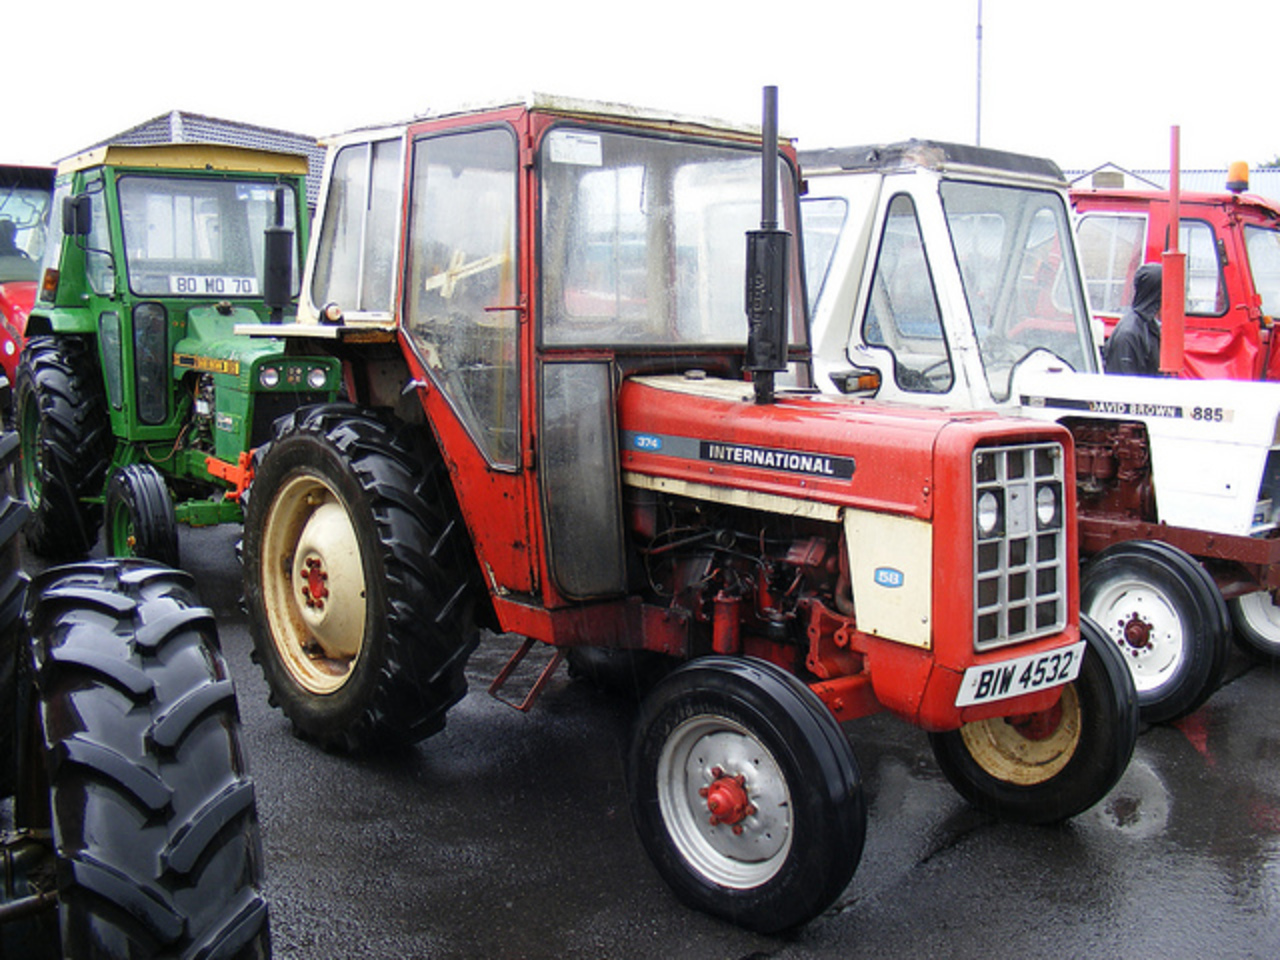 International tractors B-250 etc - une galerie sur Flickr